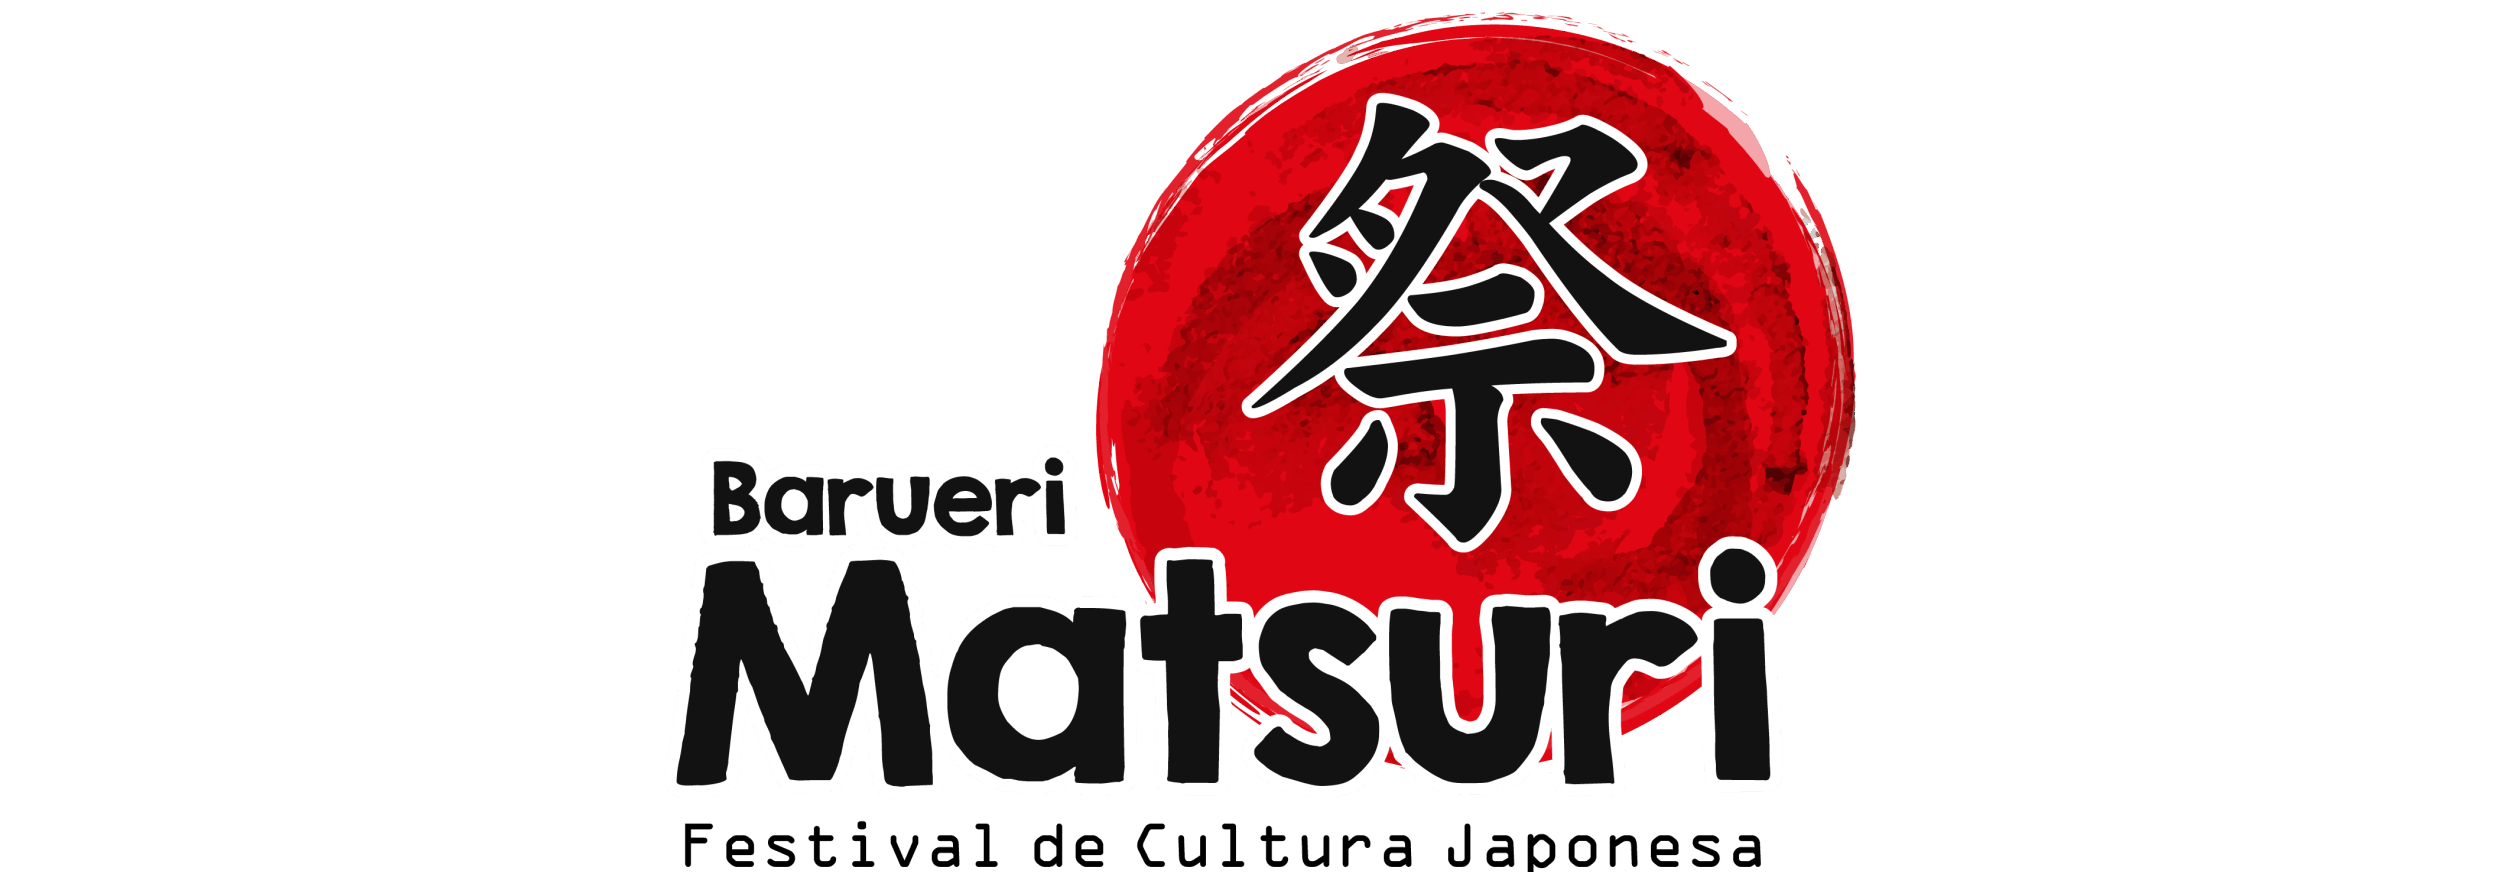 festival-de-cultura-japonesa